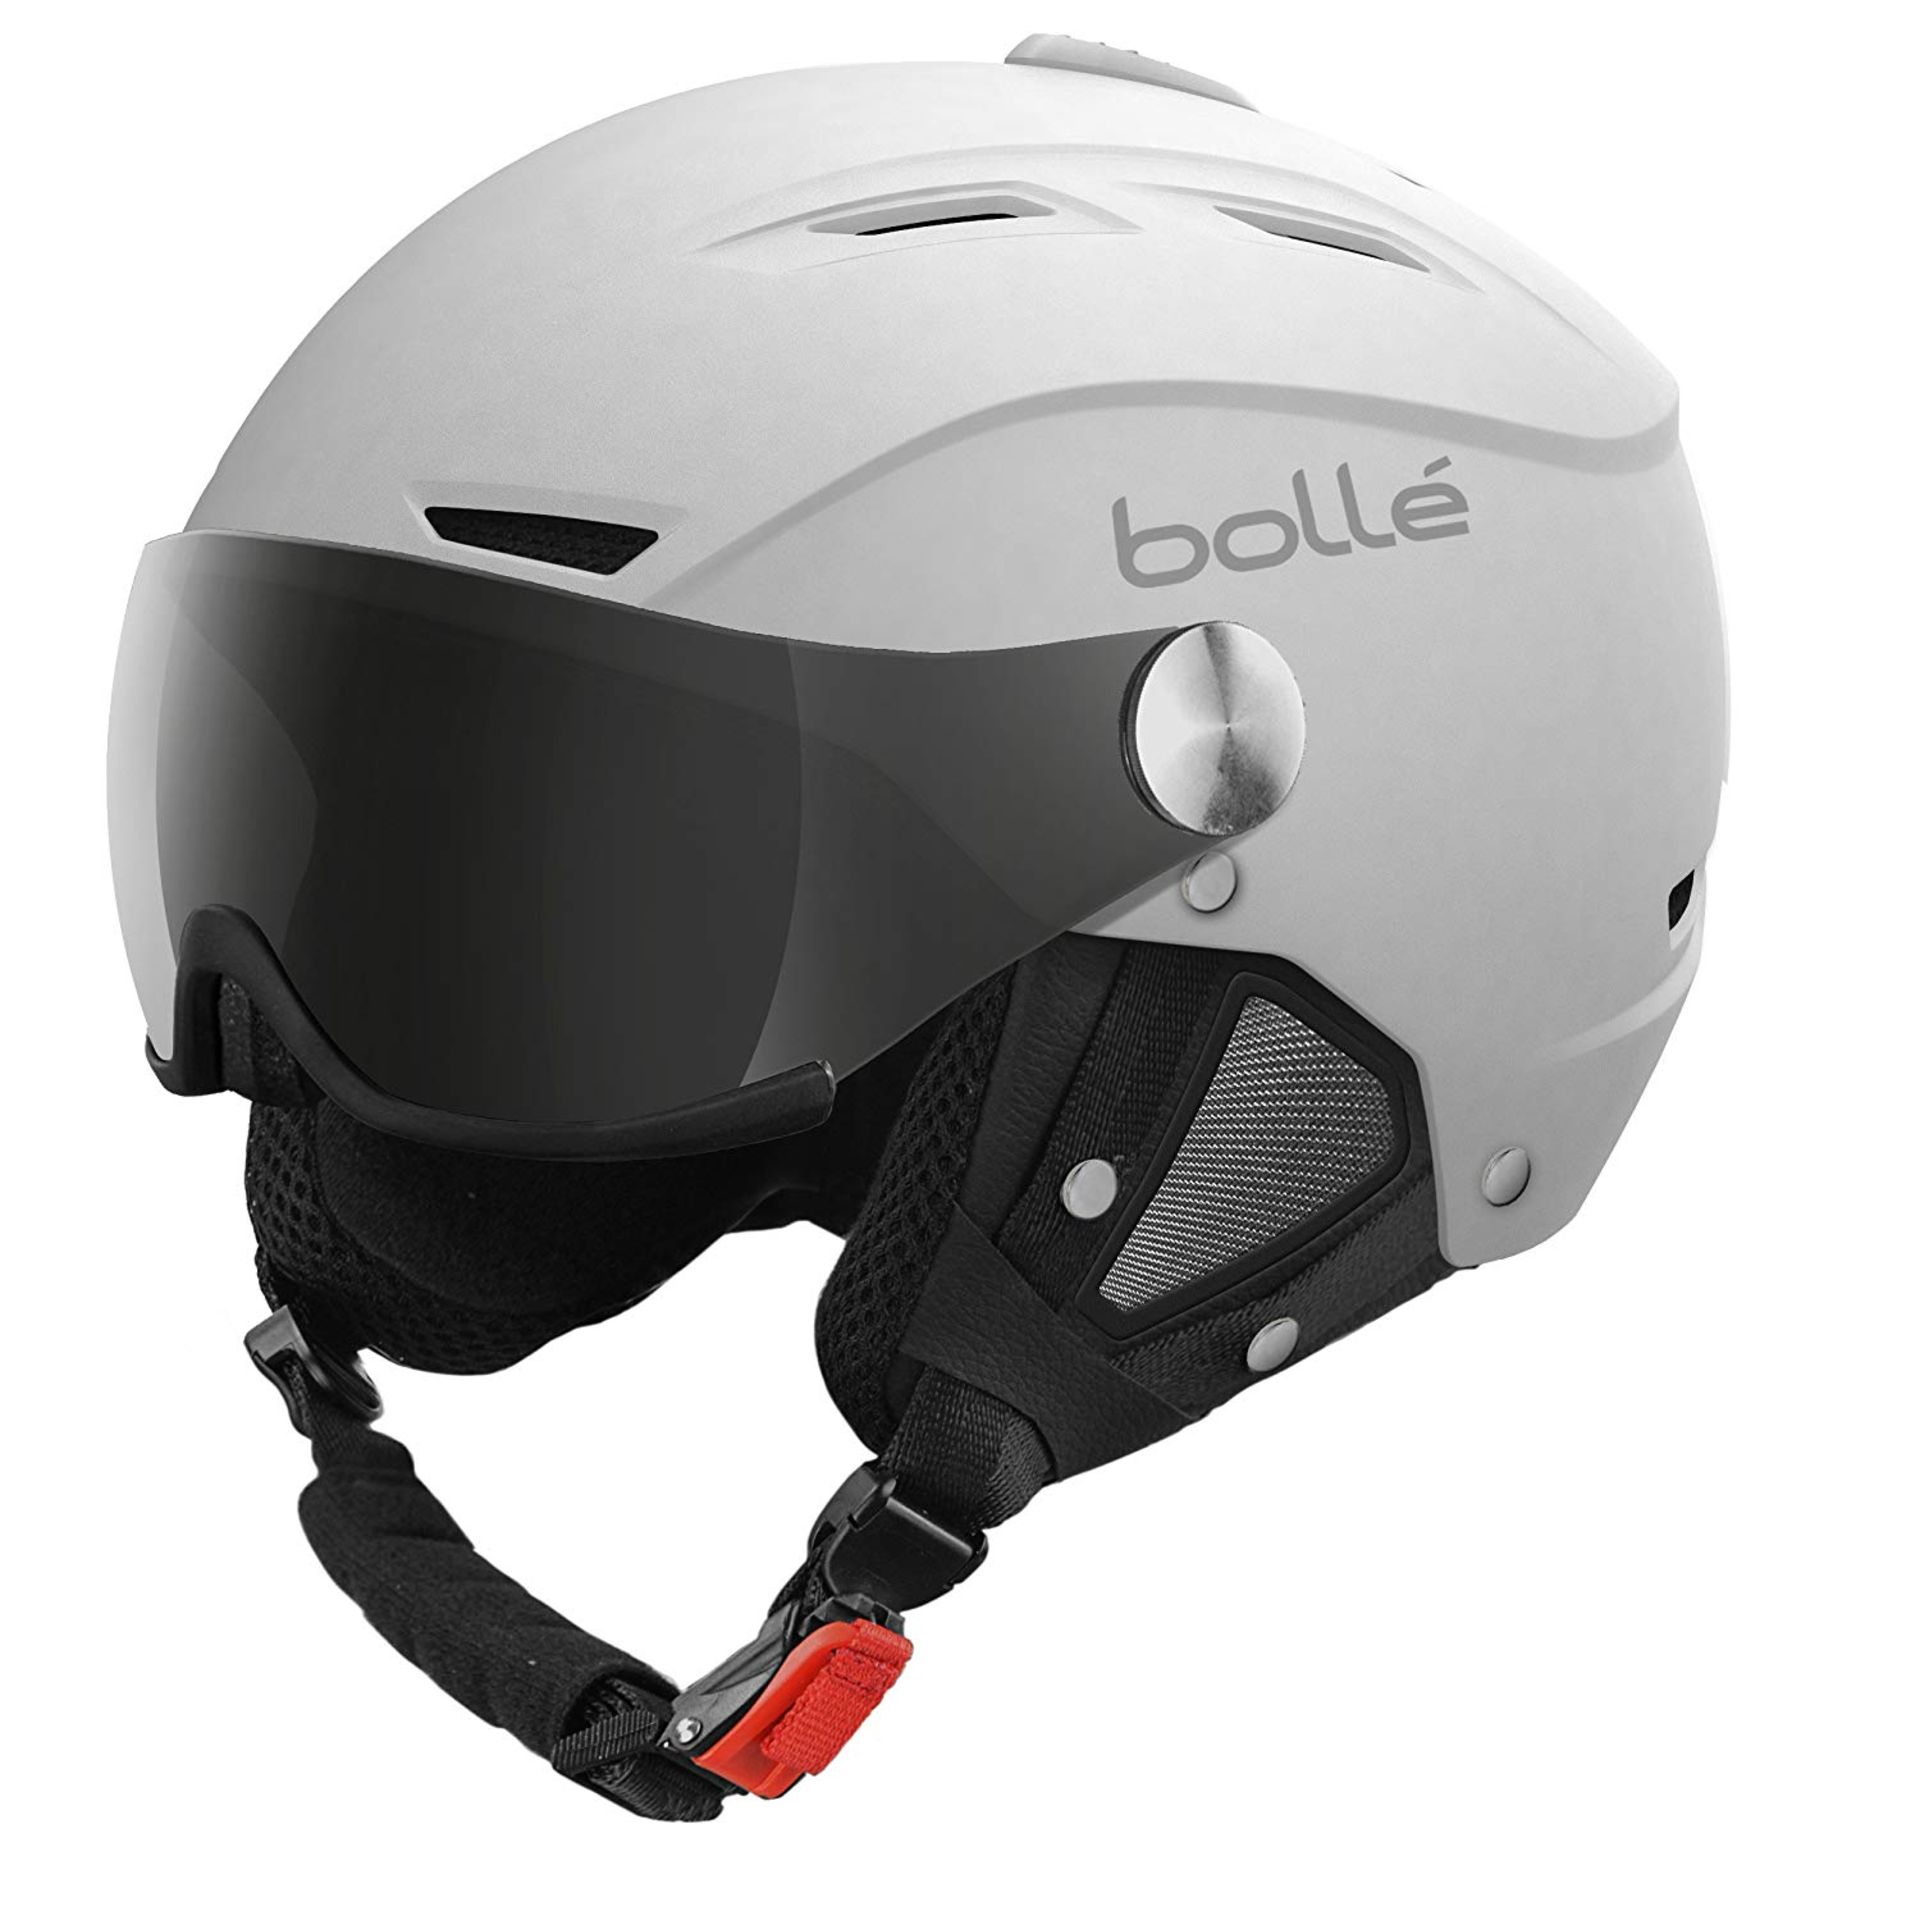 Brand new Bollé Backline Visor Outdoor Skiing Helmet Size L RRP £179.99